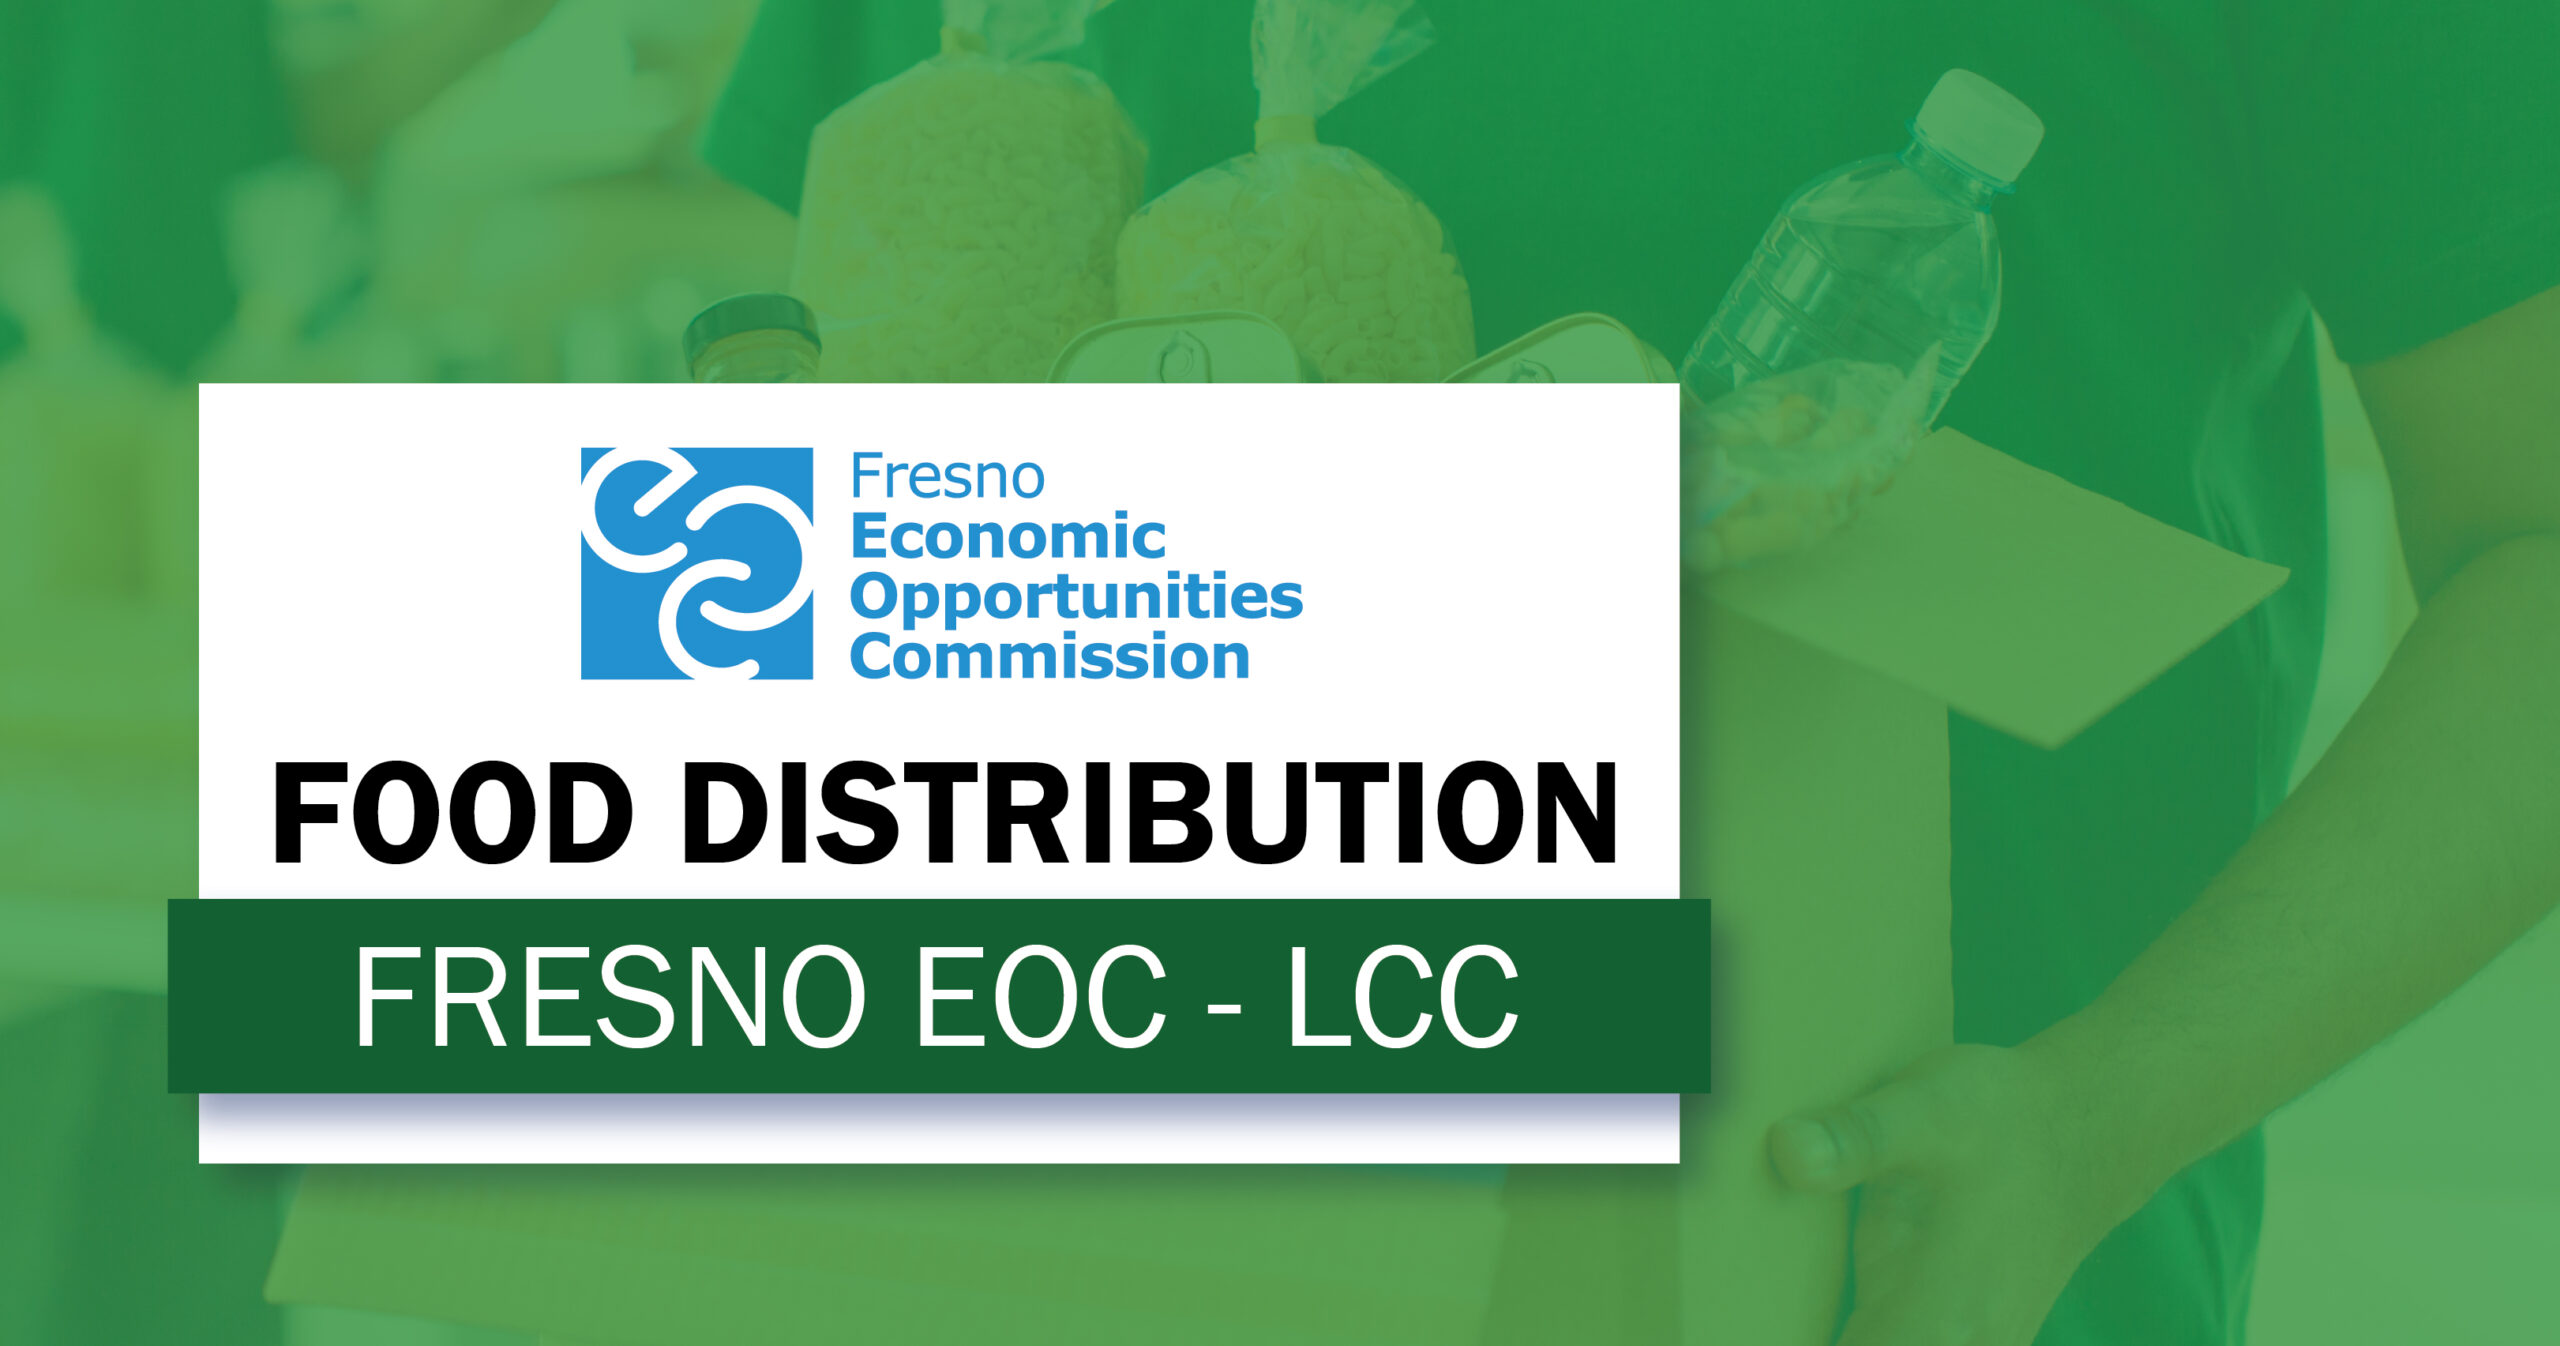 Fresno EOC LCC Food Distribution Fresno Economic Opportunities Commission